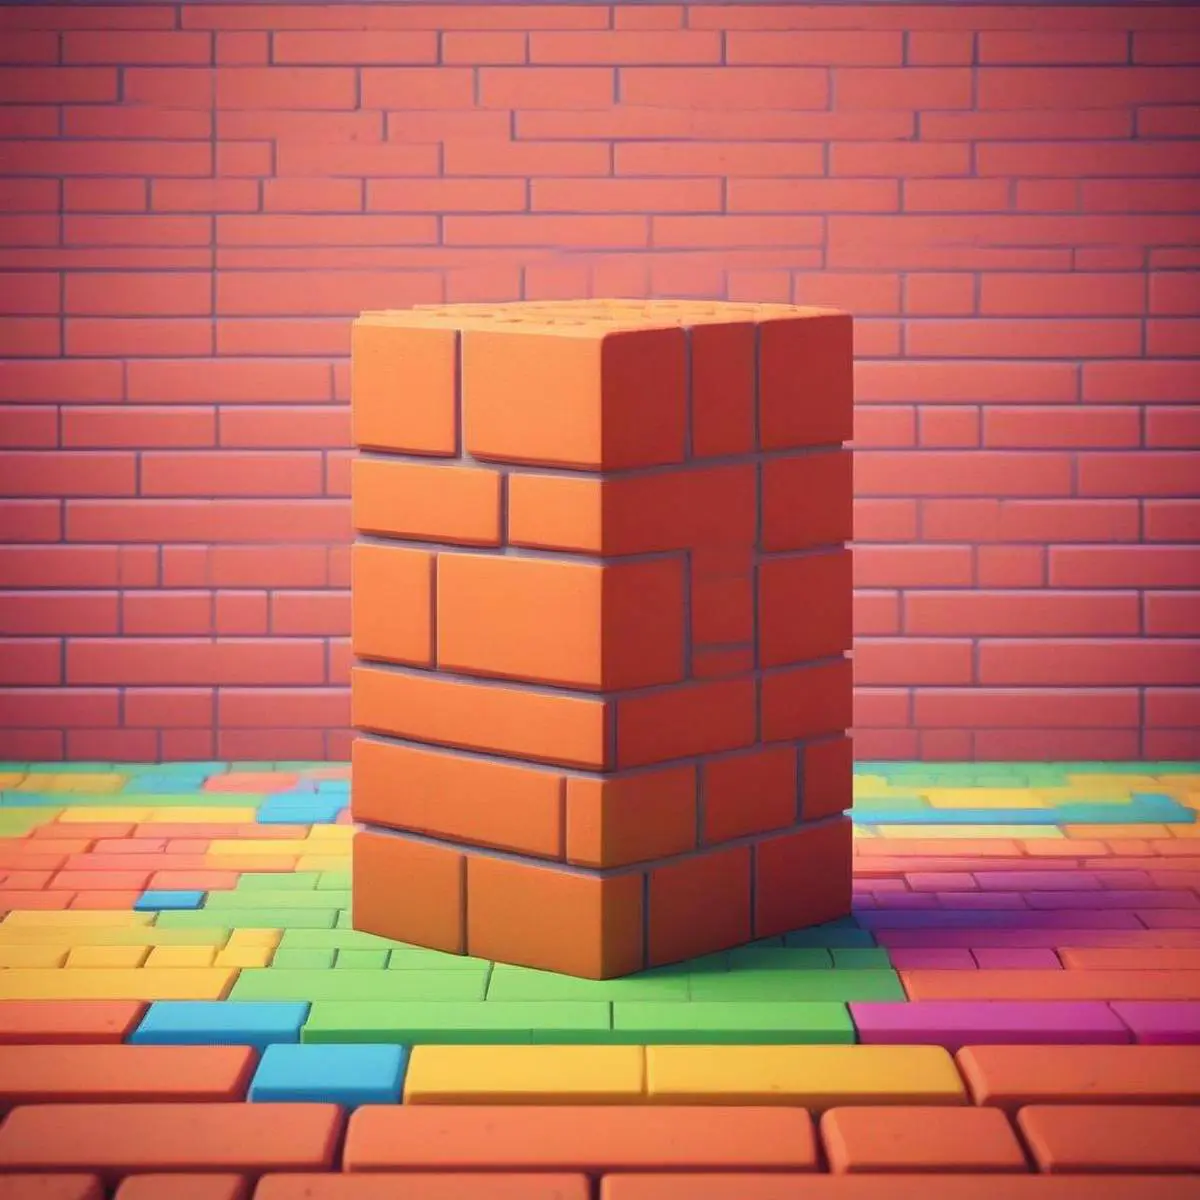 Brick puns